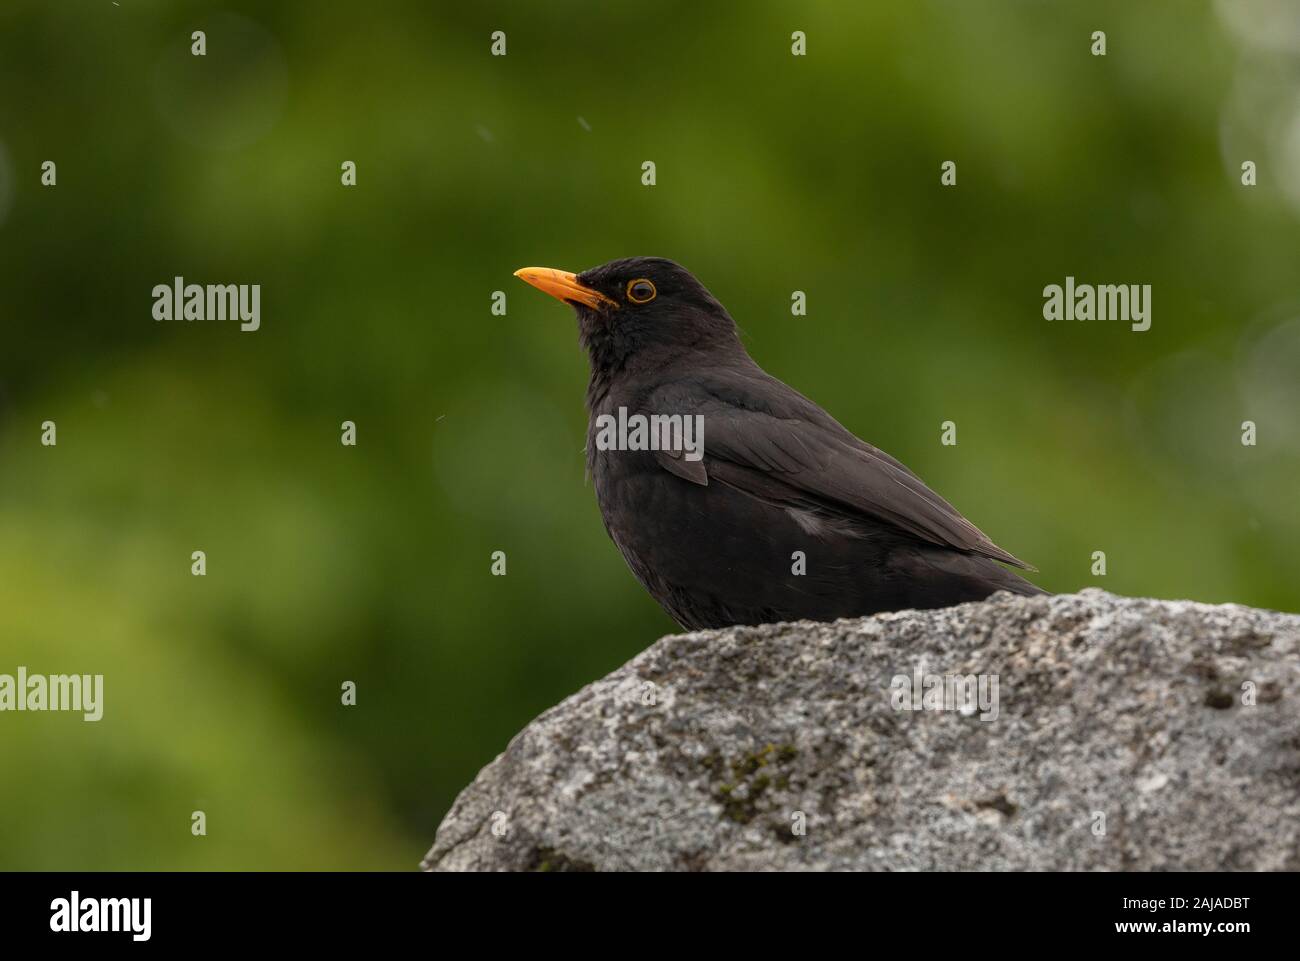 Male Blackbird, perched on rock, in breeding season. Stock Photo